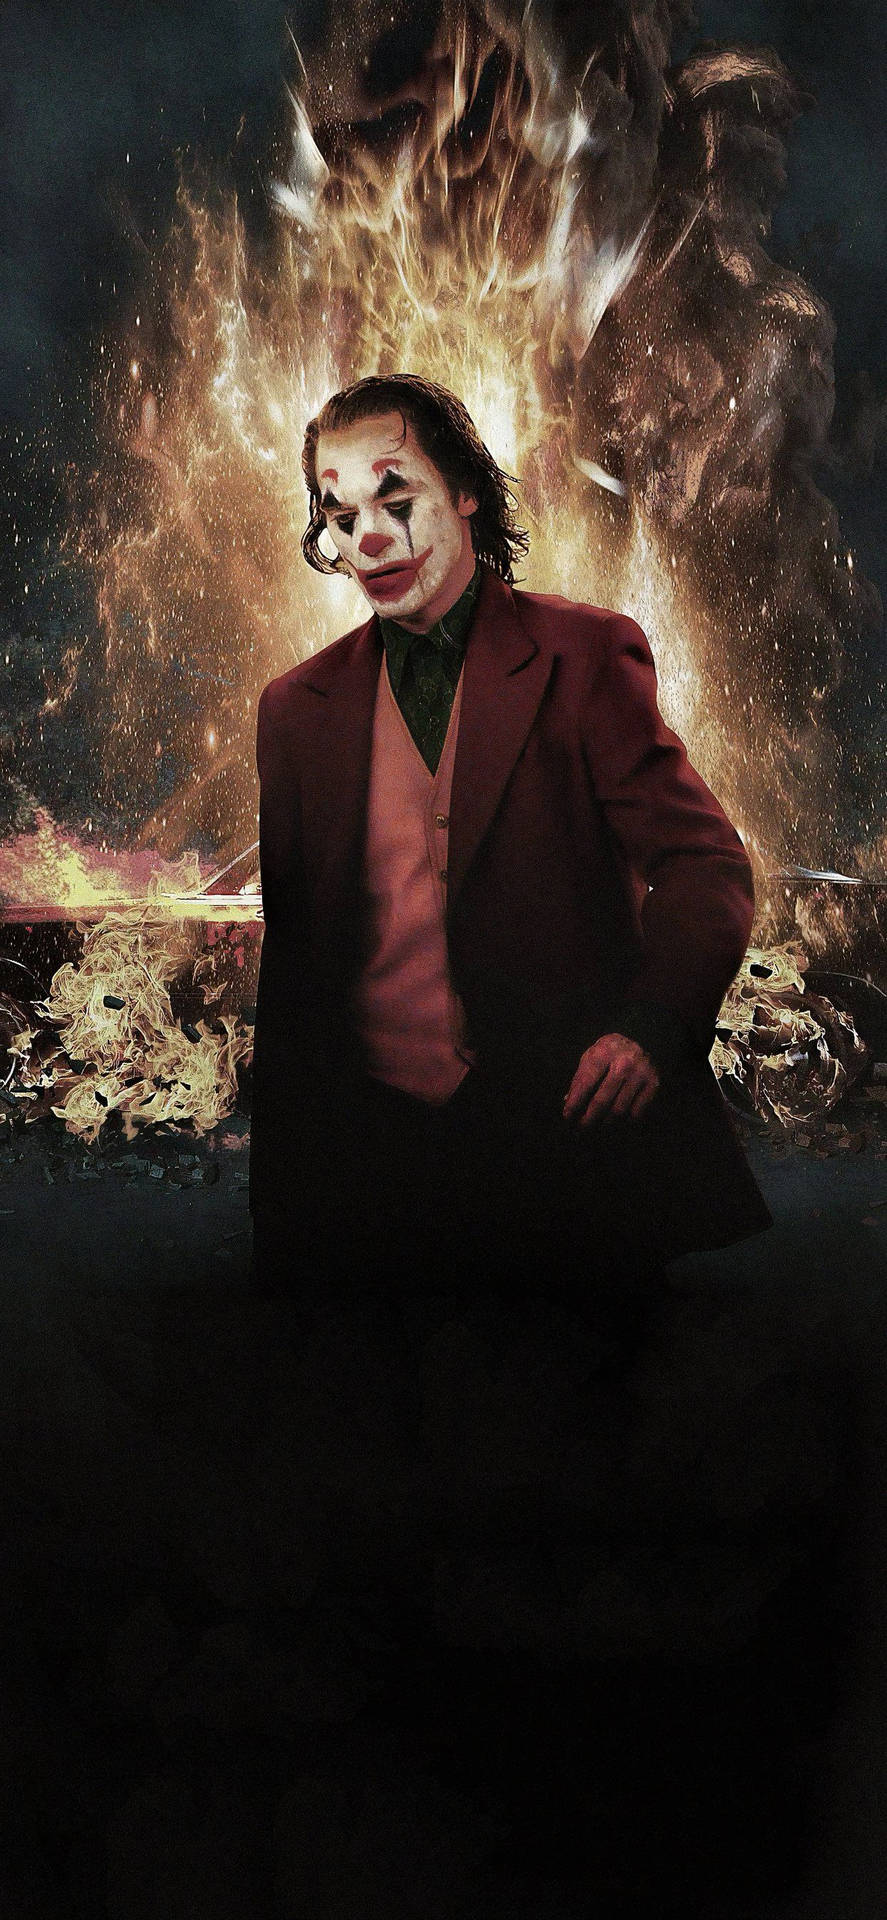 Joker iPhone On Fire Background Wallpaper